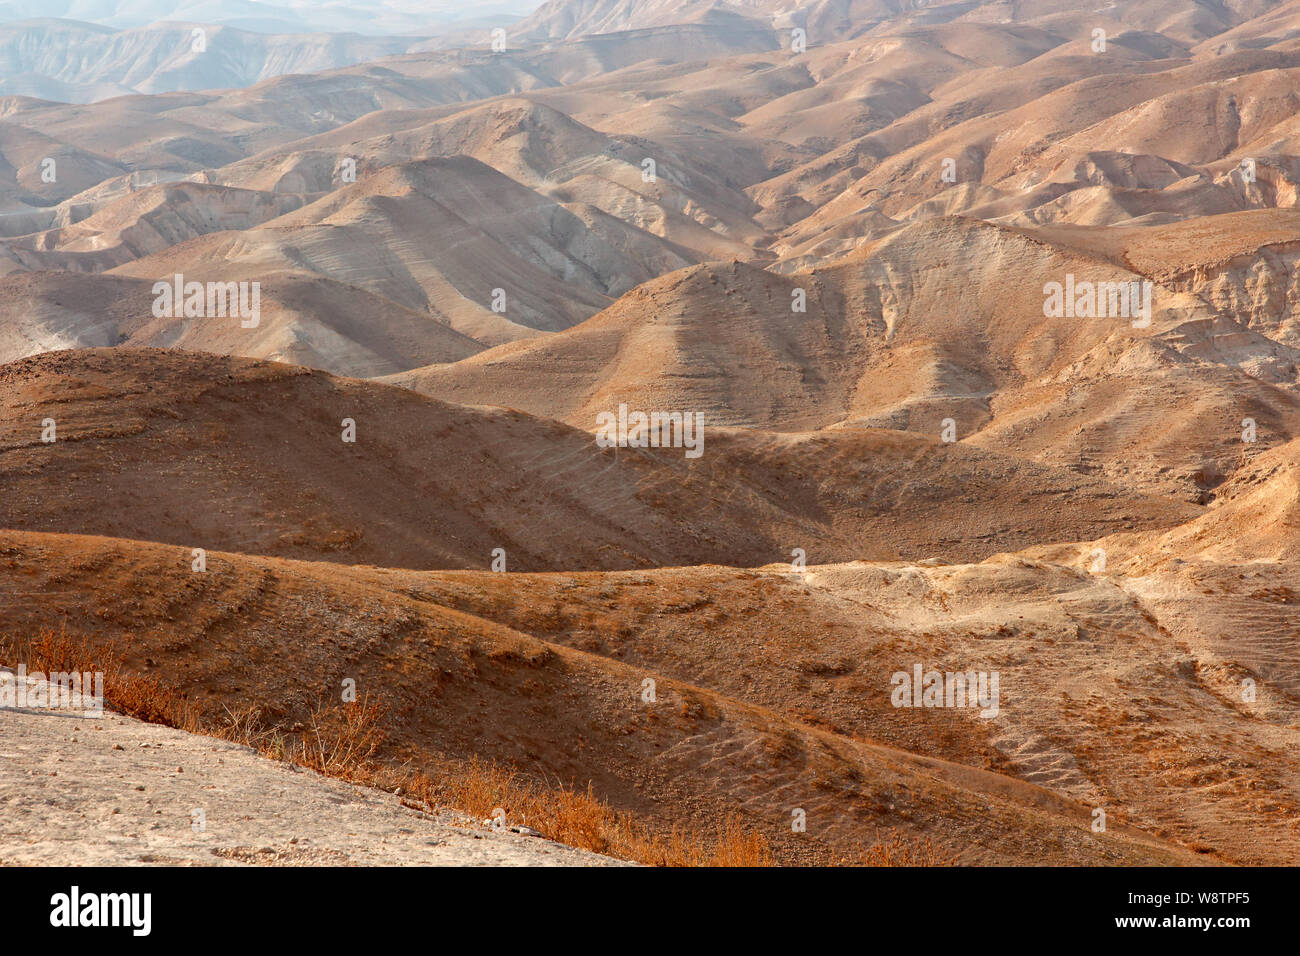 Scenic mountainous Judean desert landscape near Jericho, Israel Stock Photo